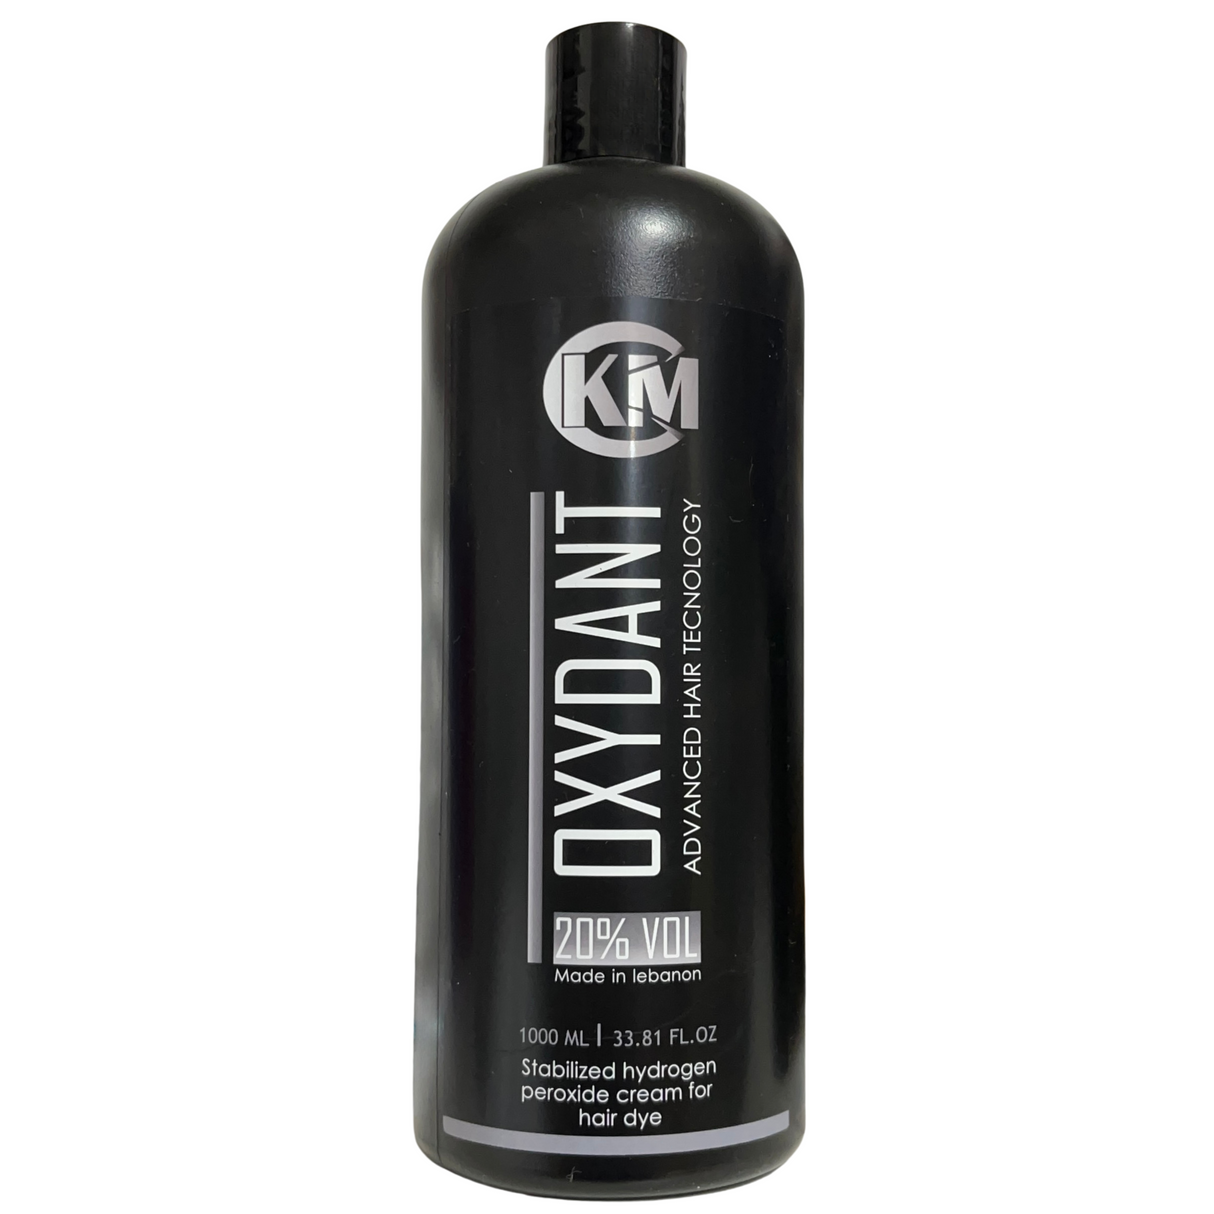 KM - Oxidant 20% Vol Advanced Hair tech